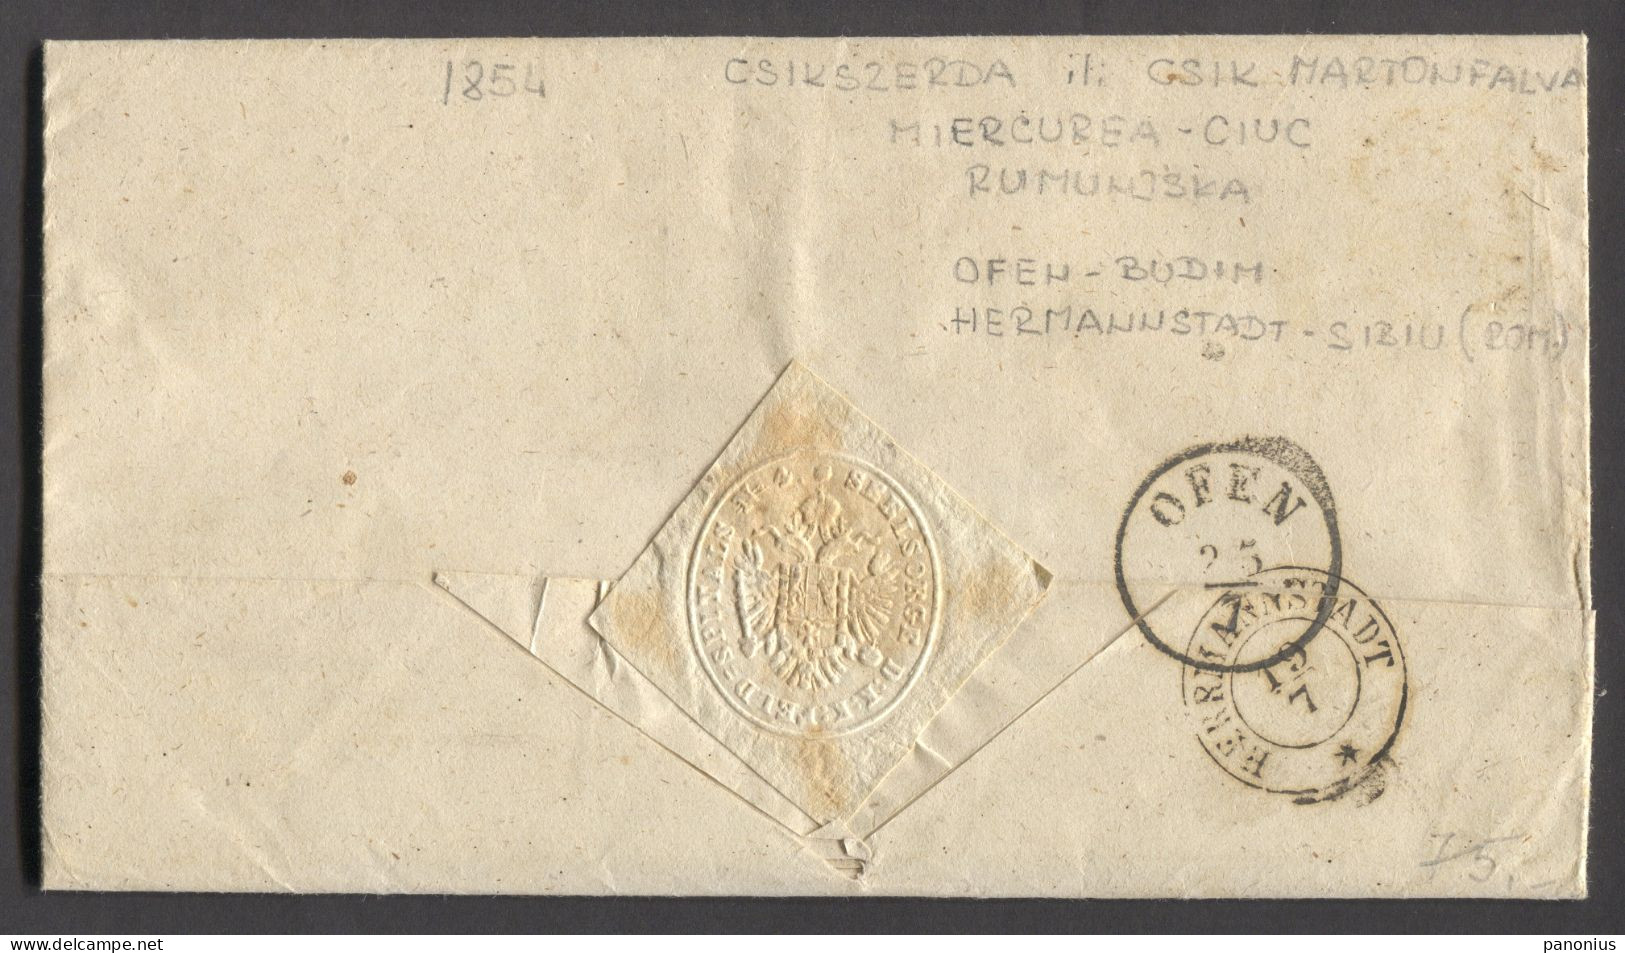 Romania - Csik Martonfalva / Csik Szereda, Prephilately Cover Feld Spital Year 1854. For Budim, Transit Seal Hermannstad - ...-1858 Préphilatélie